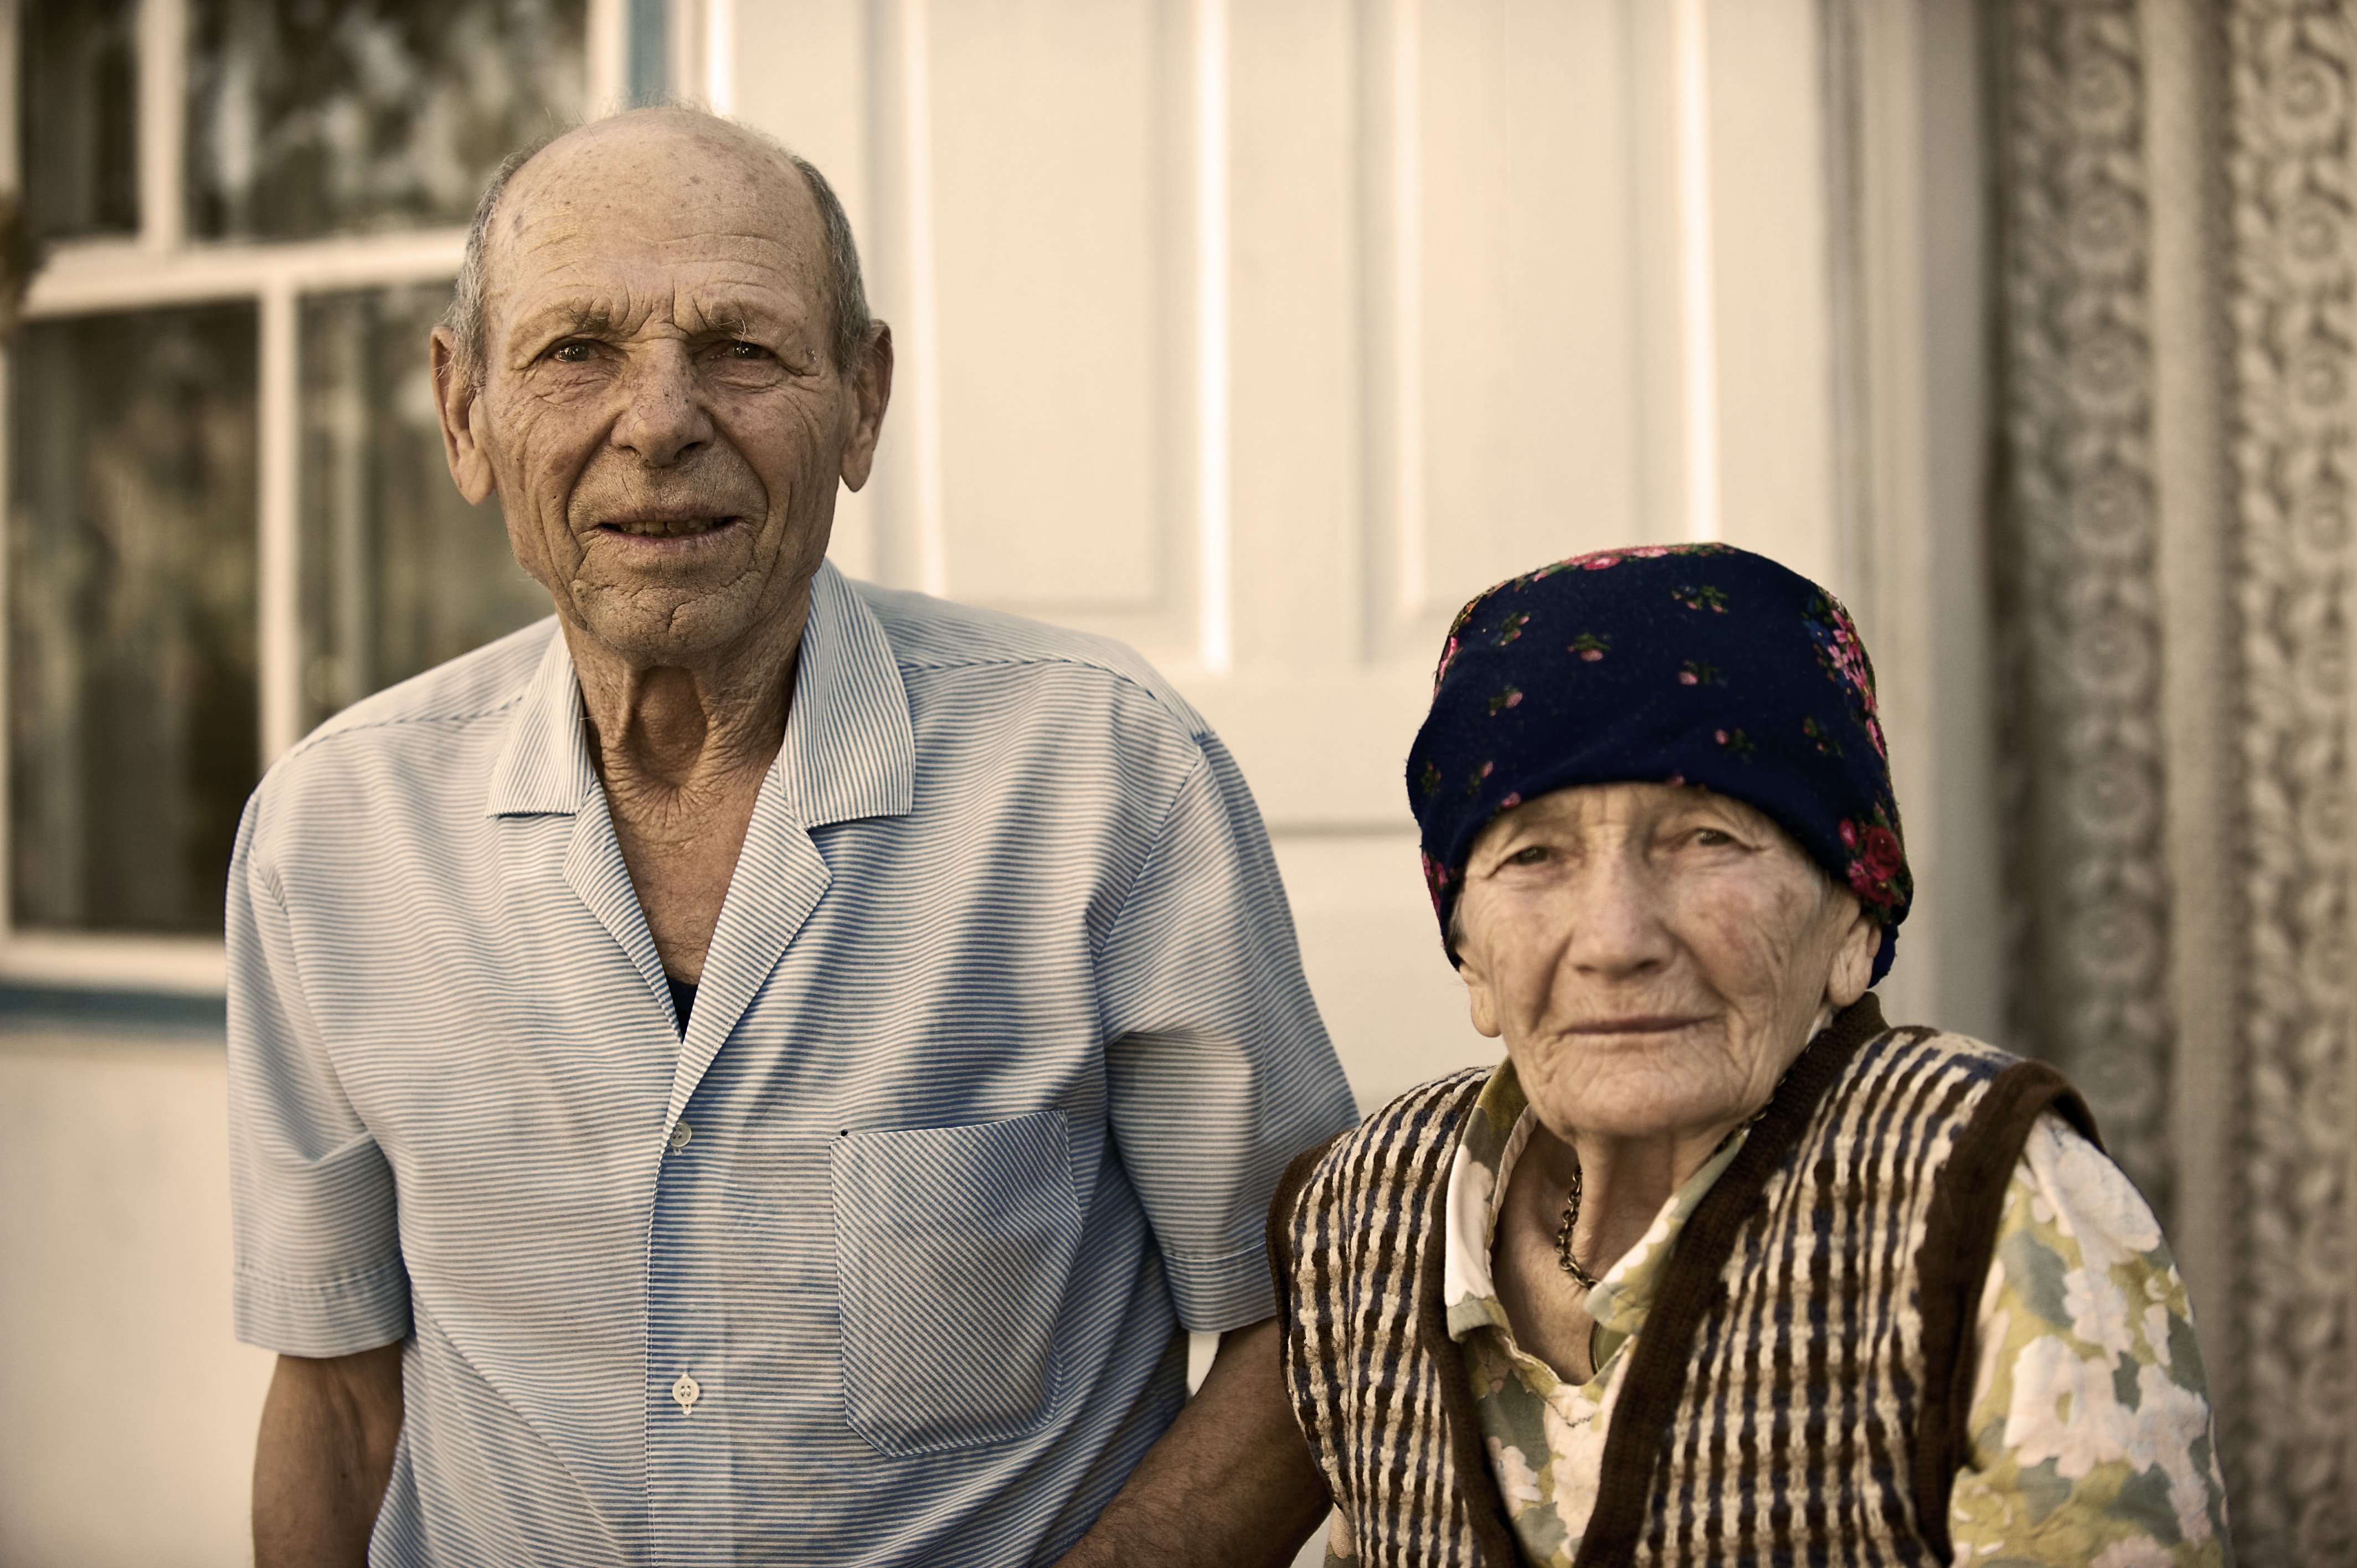 Matrimonio de ancianos | Imagen: Wikimedia Commons